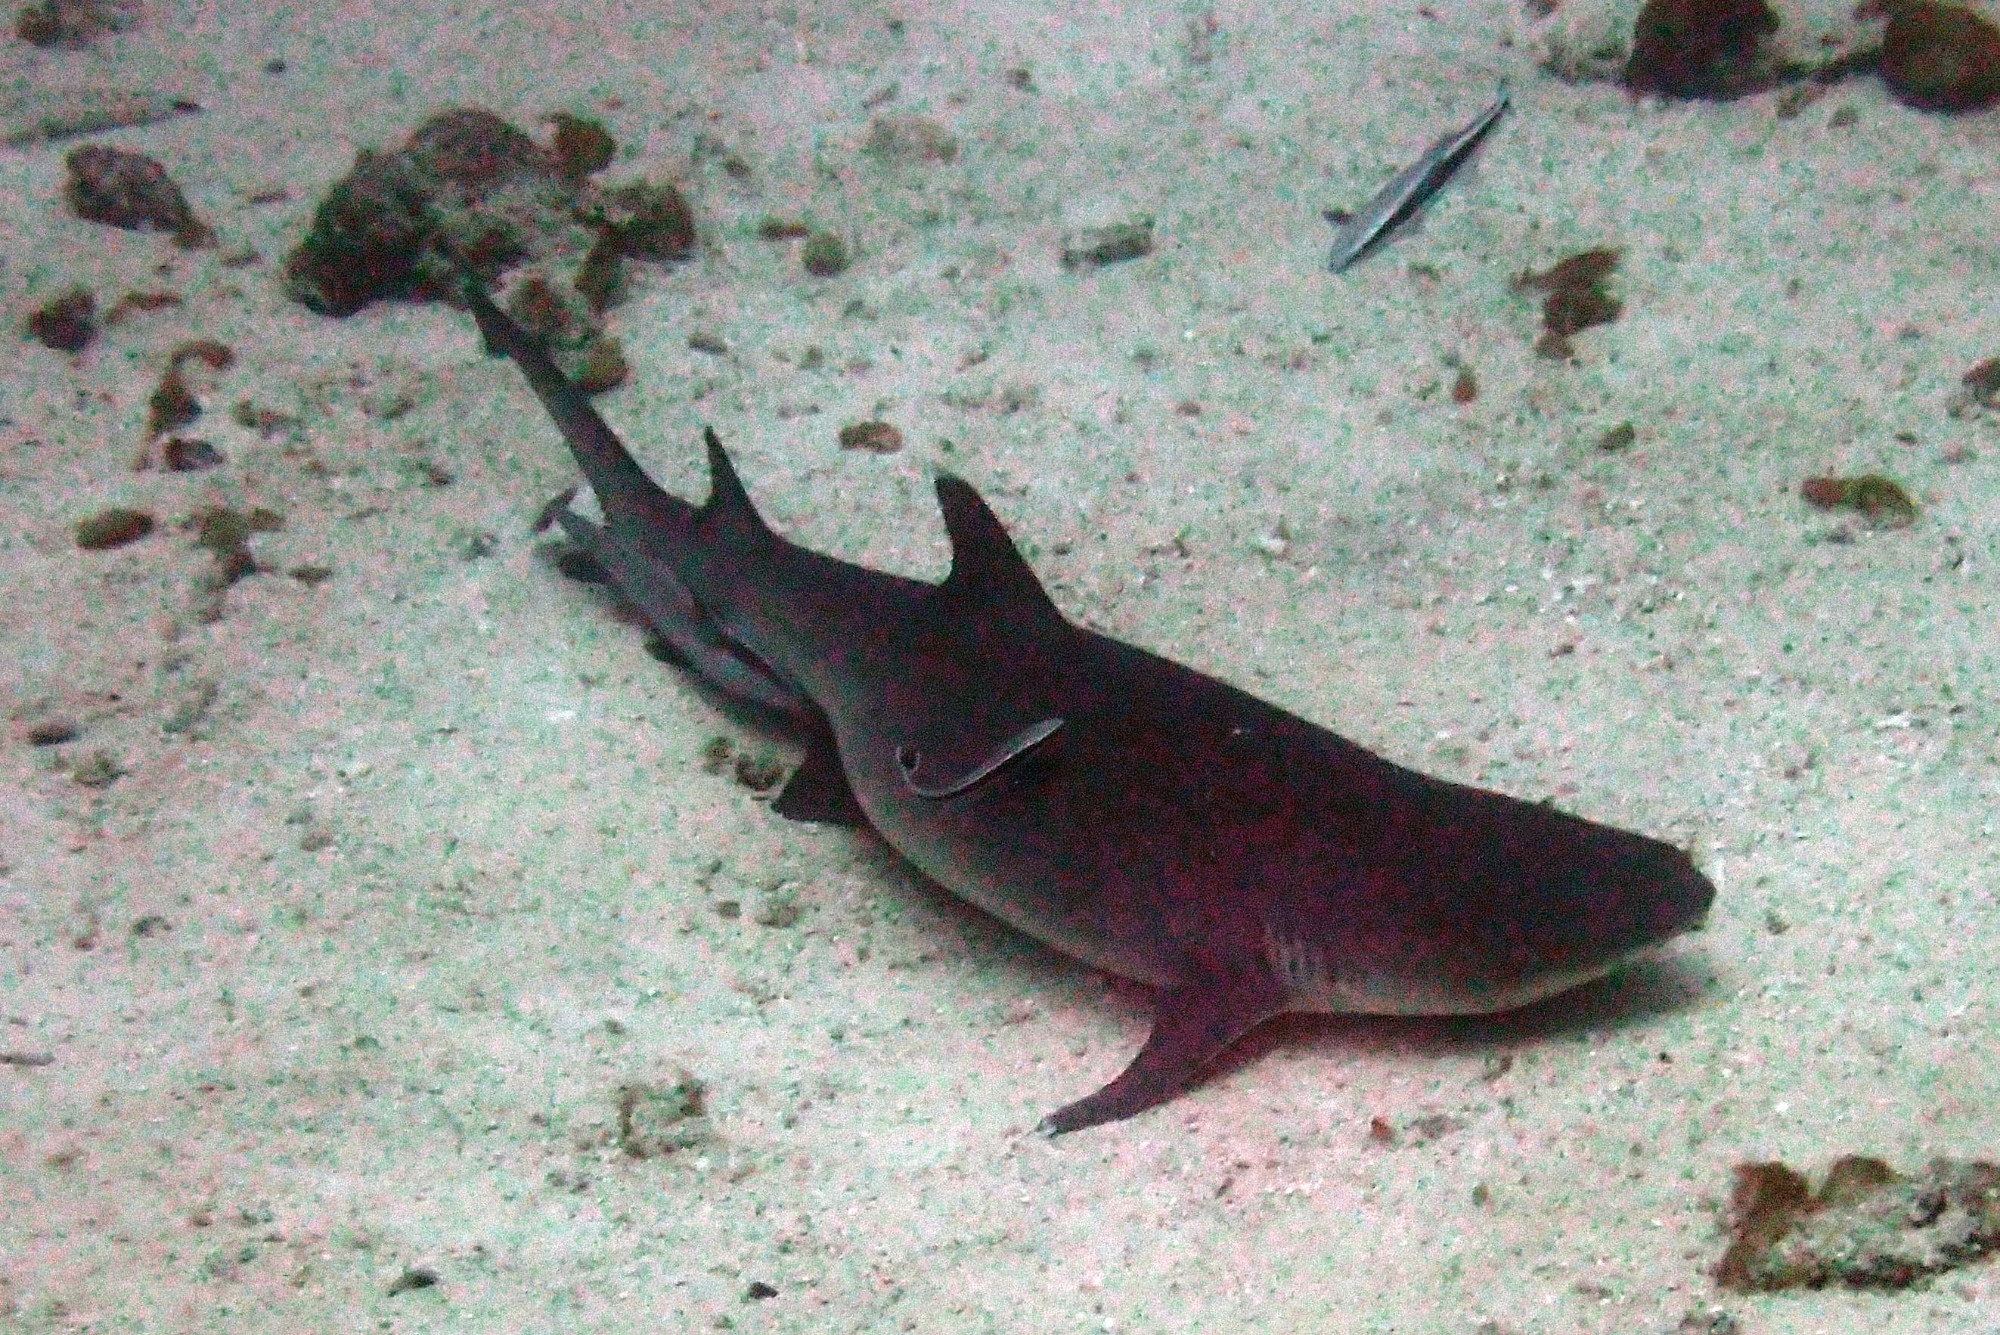 Black Trip Reef Shark